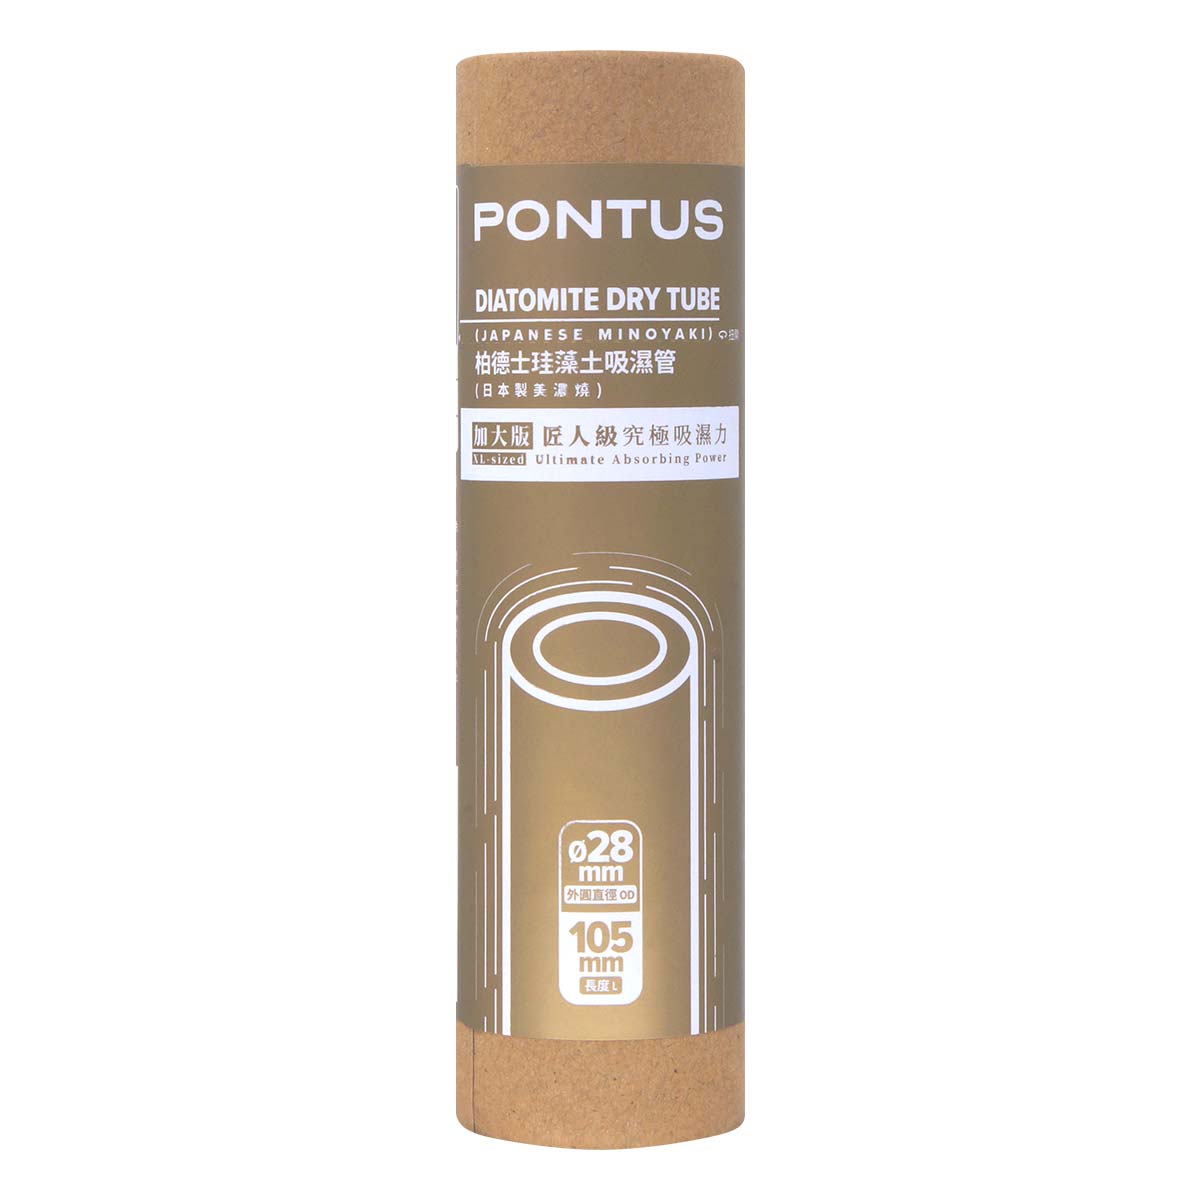 PONTUS Diatomite Dry Tube (Japanese Minoyaki) (For male toys)-p_2